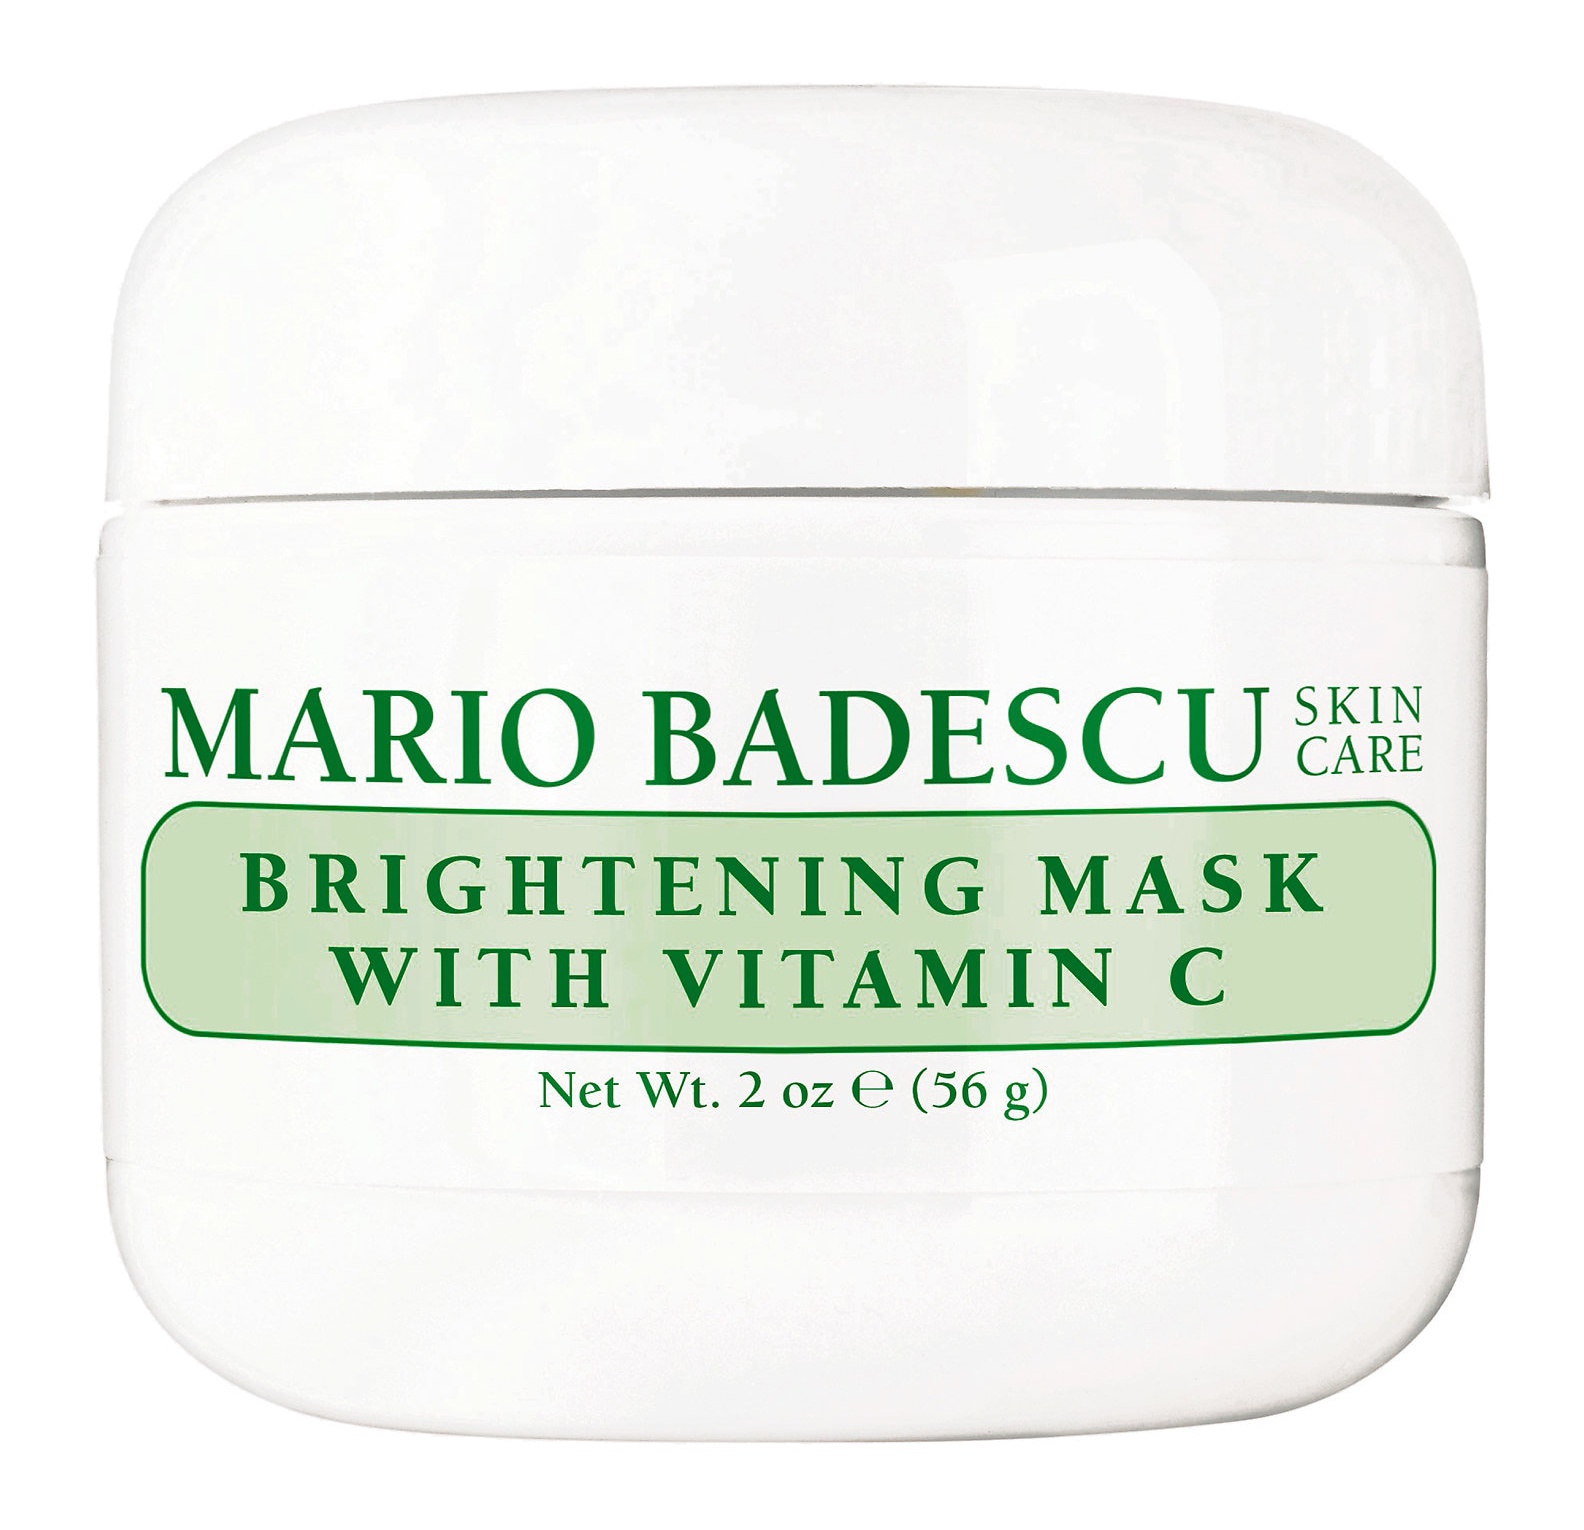 Mario Badescu Brightening Mask With Vitamin C